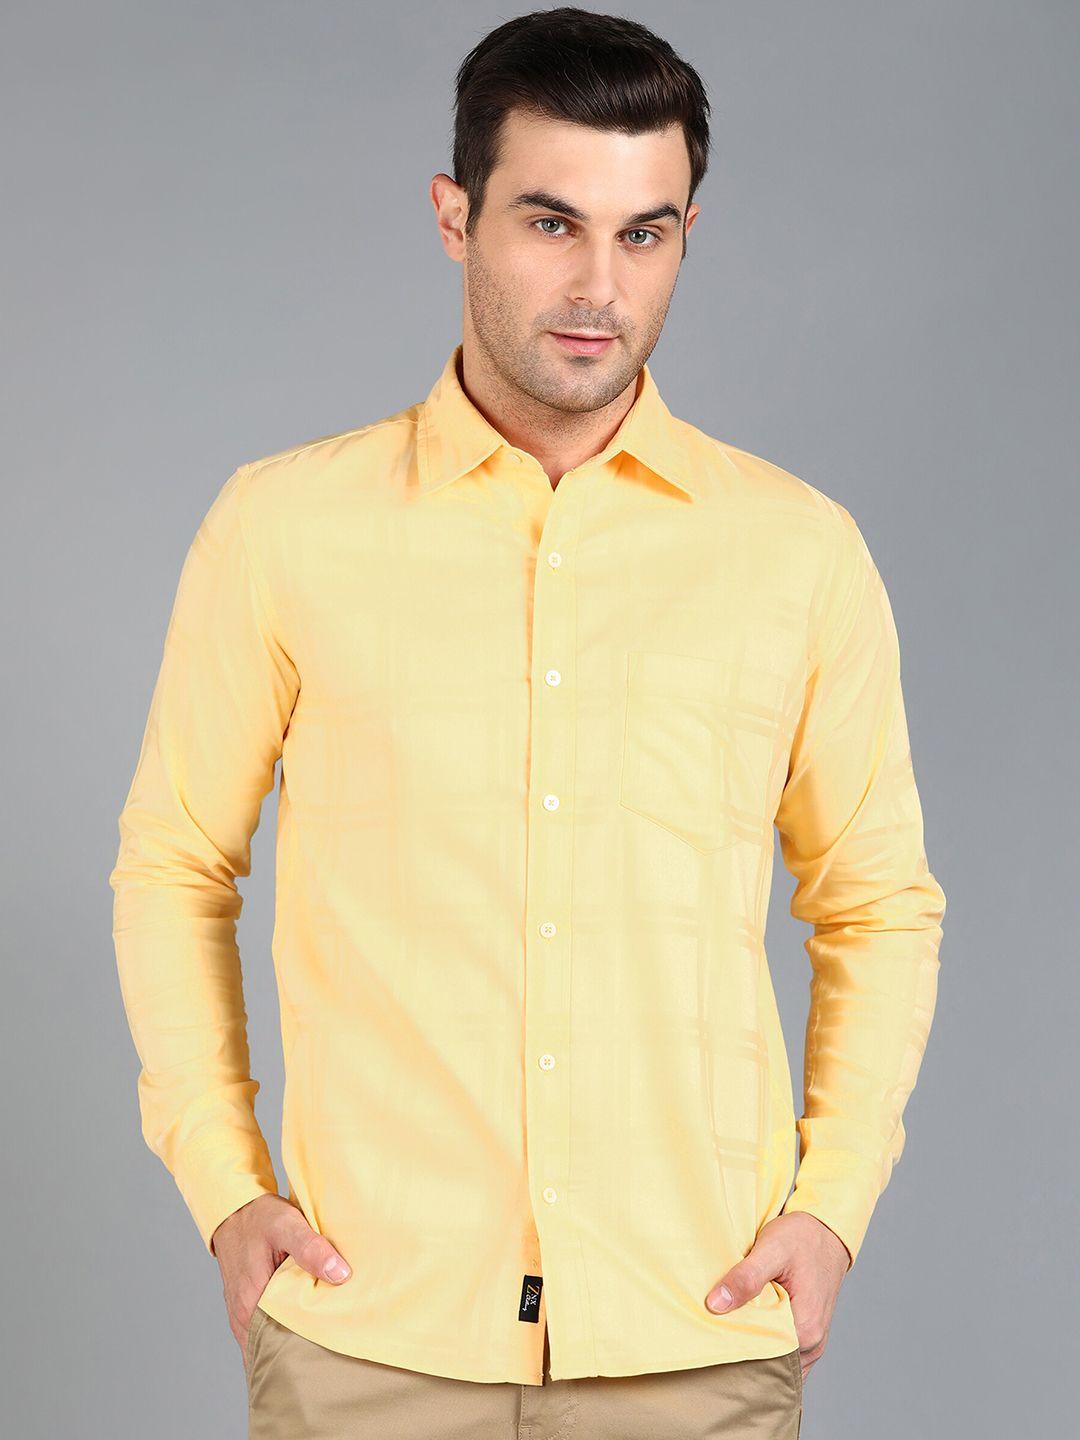 znx clothing men yellow premium slim fit opaque formal shirt